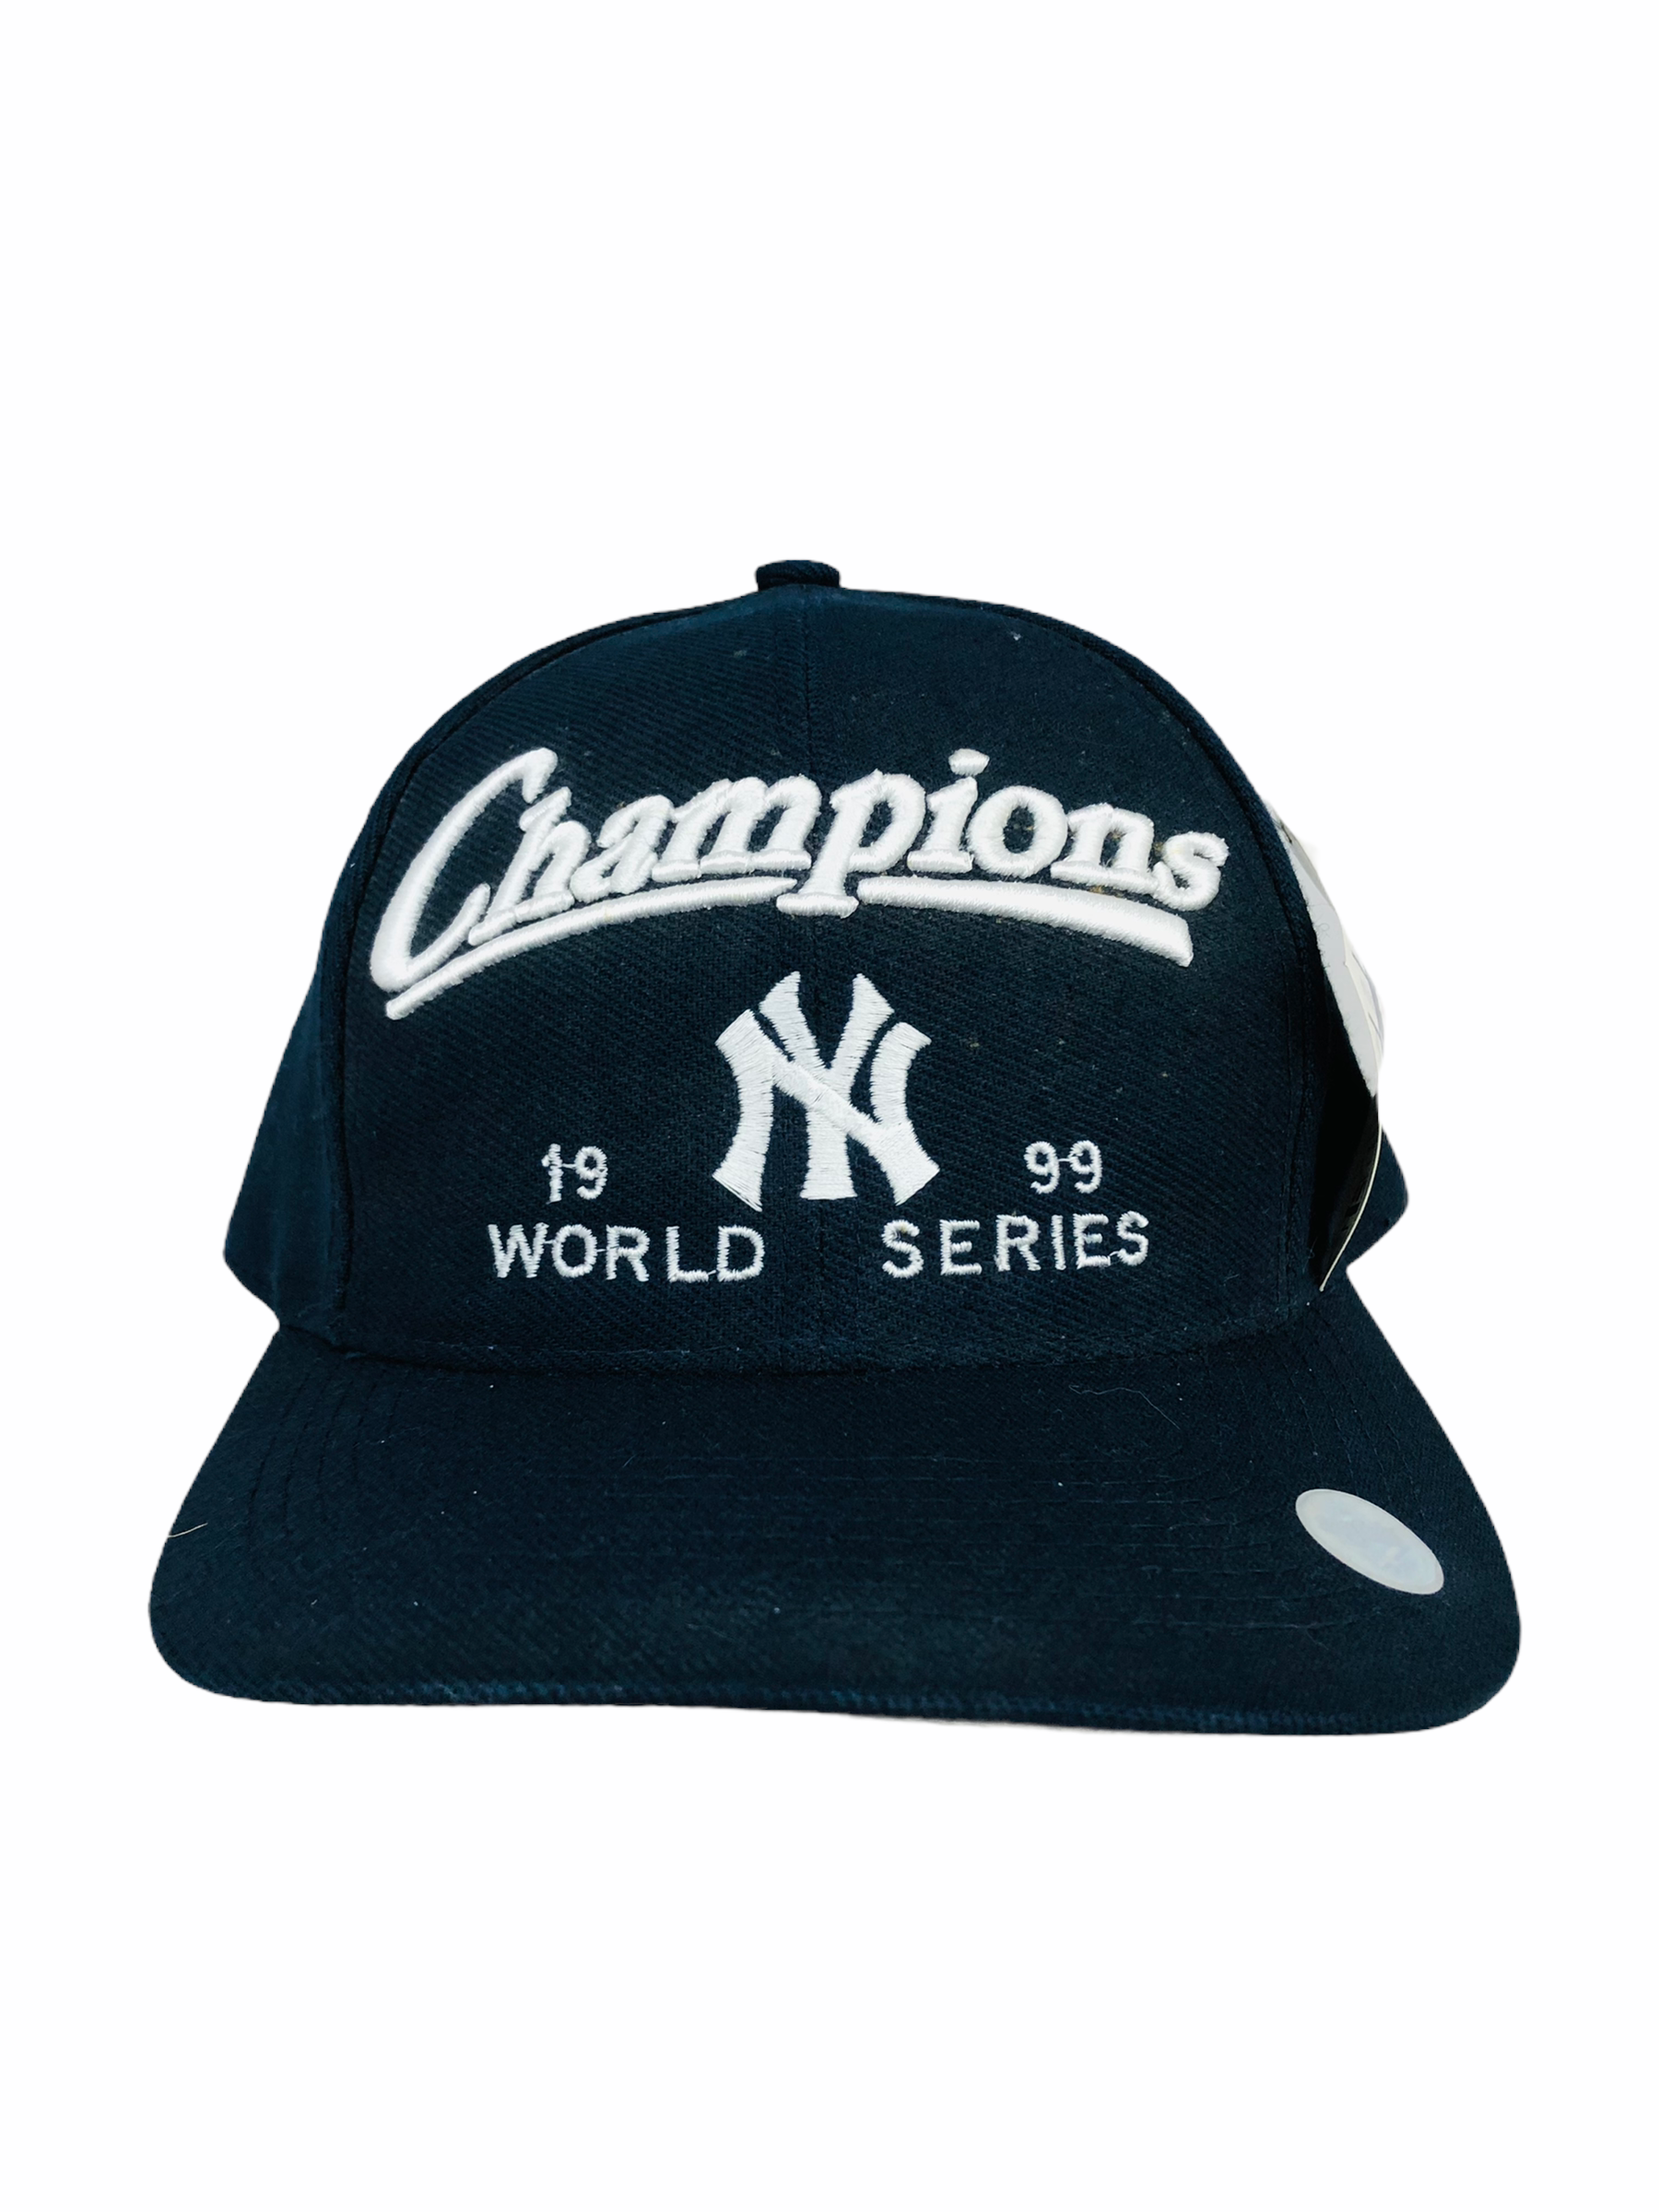 NEW YORK YANKEES VINTAGE 1999 WORLD SERIES CHAMPIONS SNAPBACK ADULT HA -  Bucks County Baseball Co.